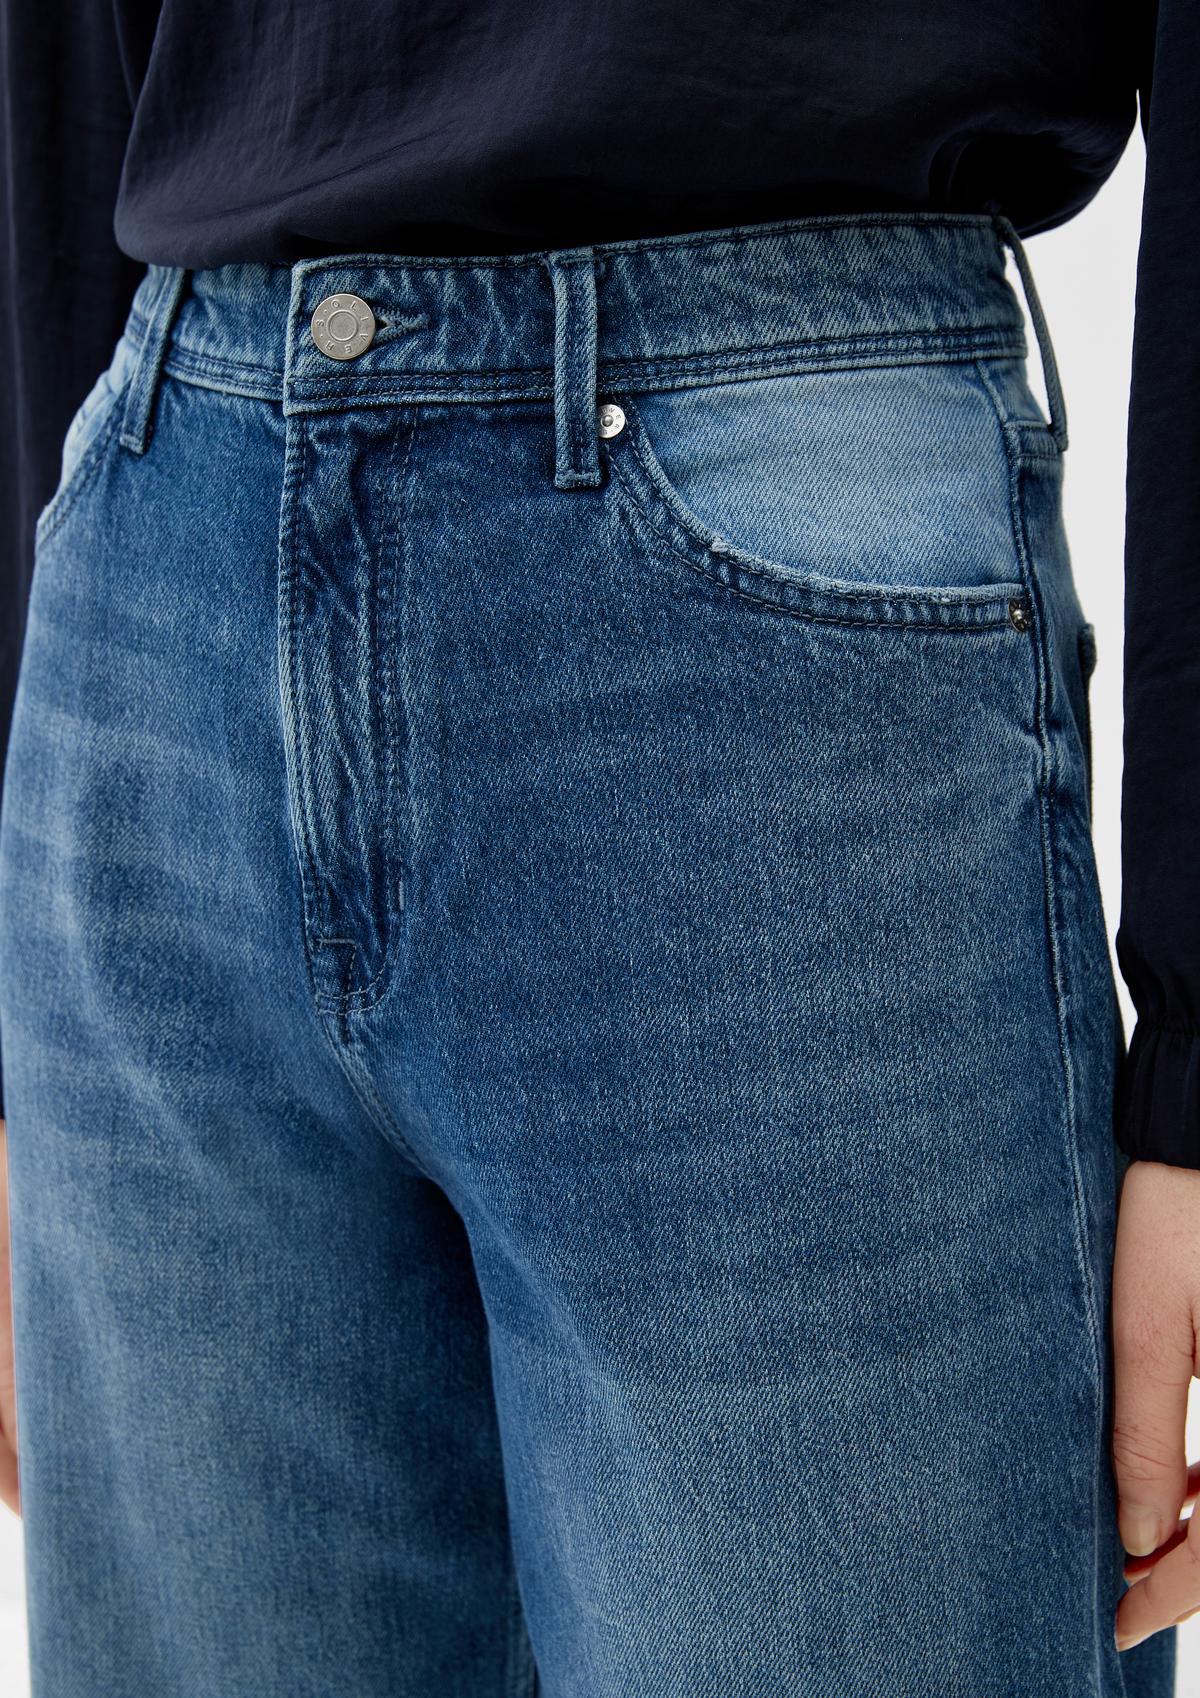 s.Oliver Suri: jeans with washed details